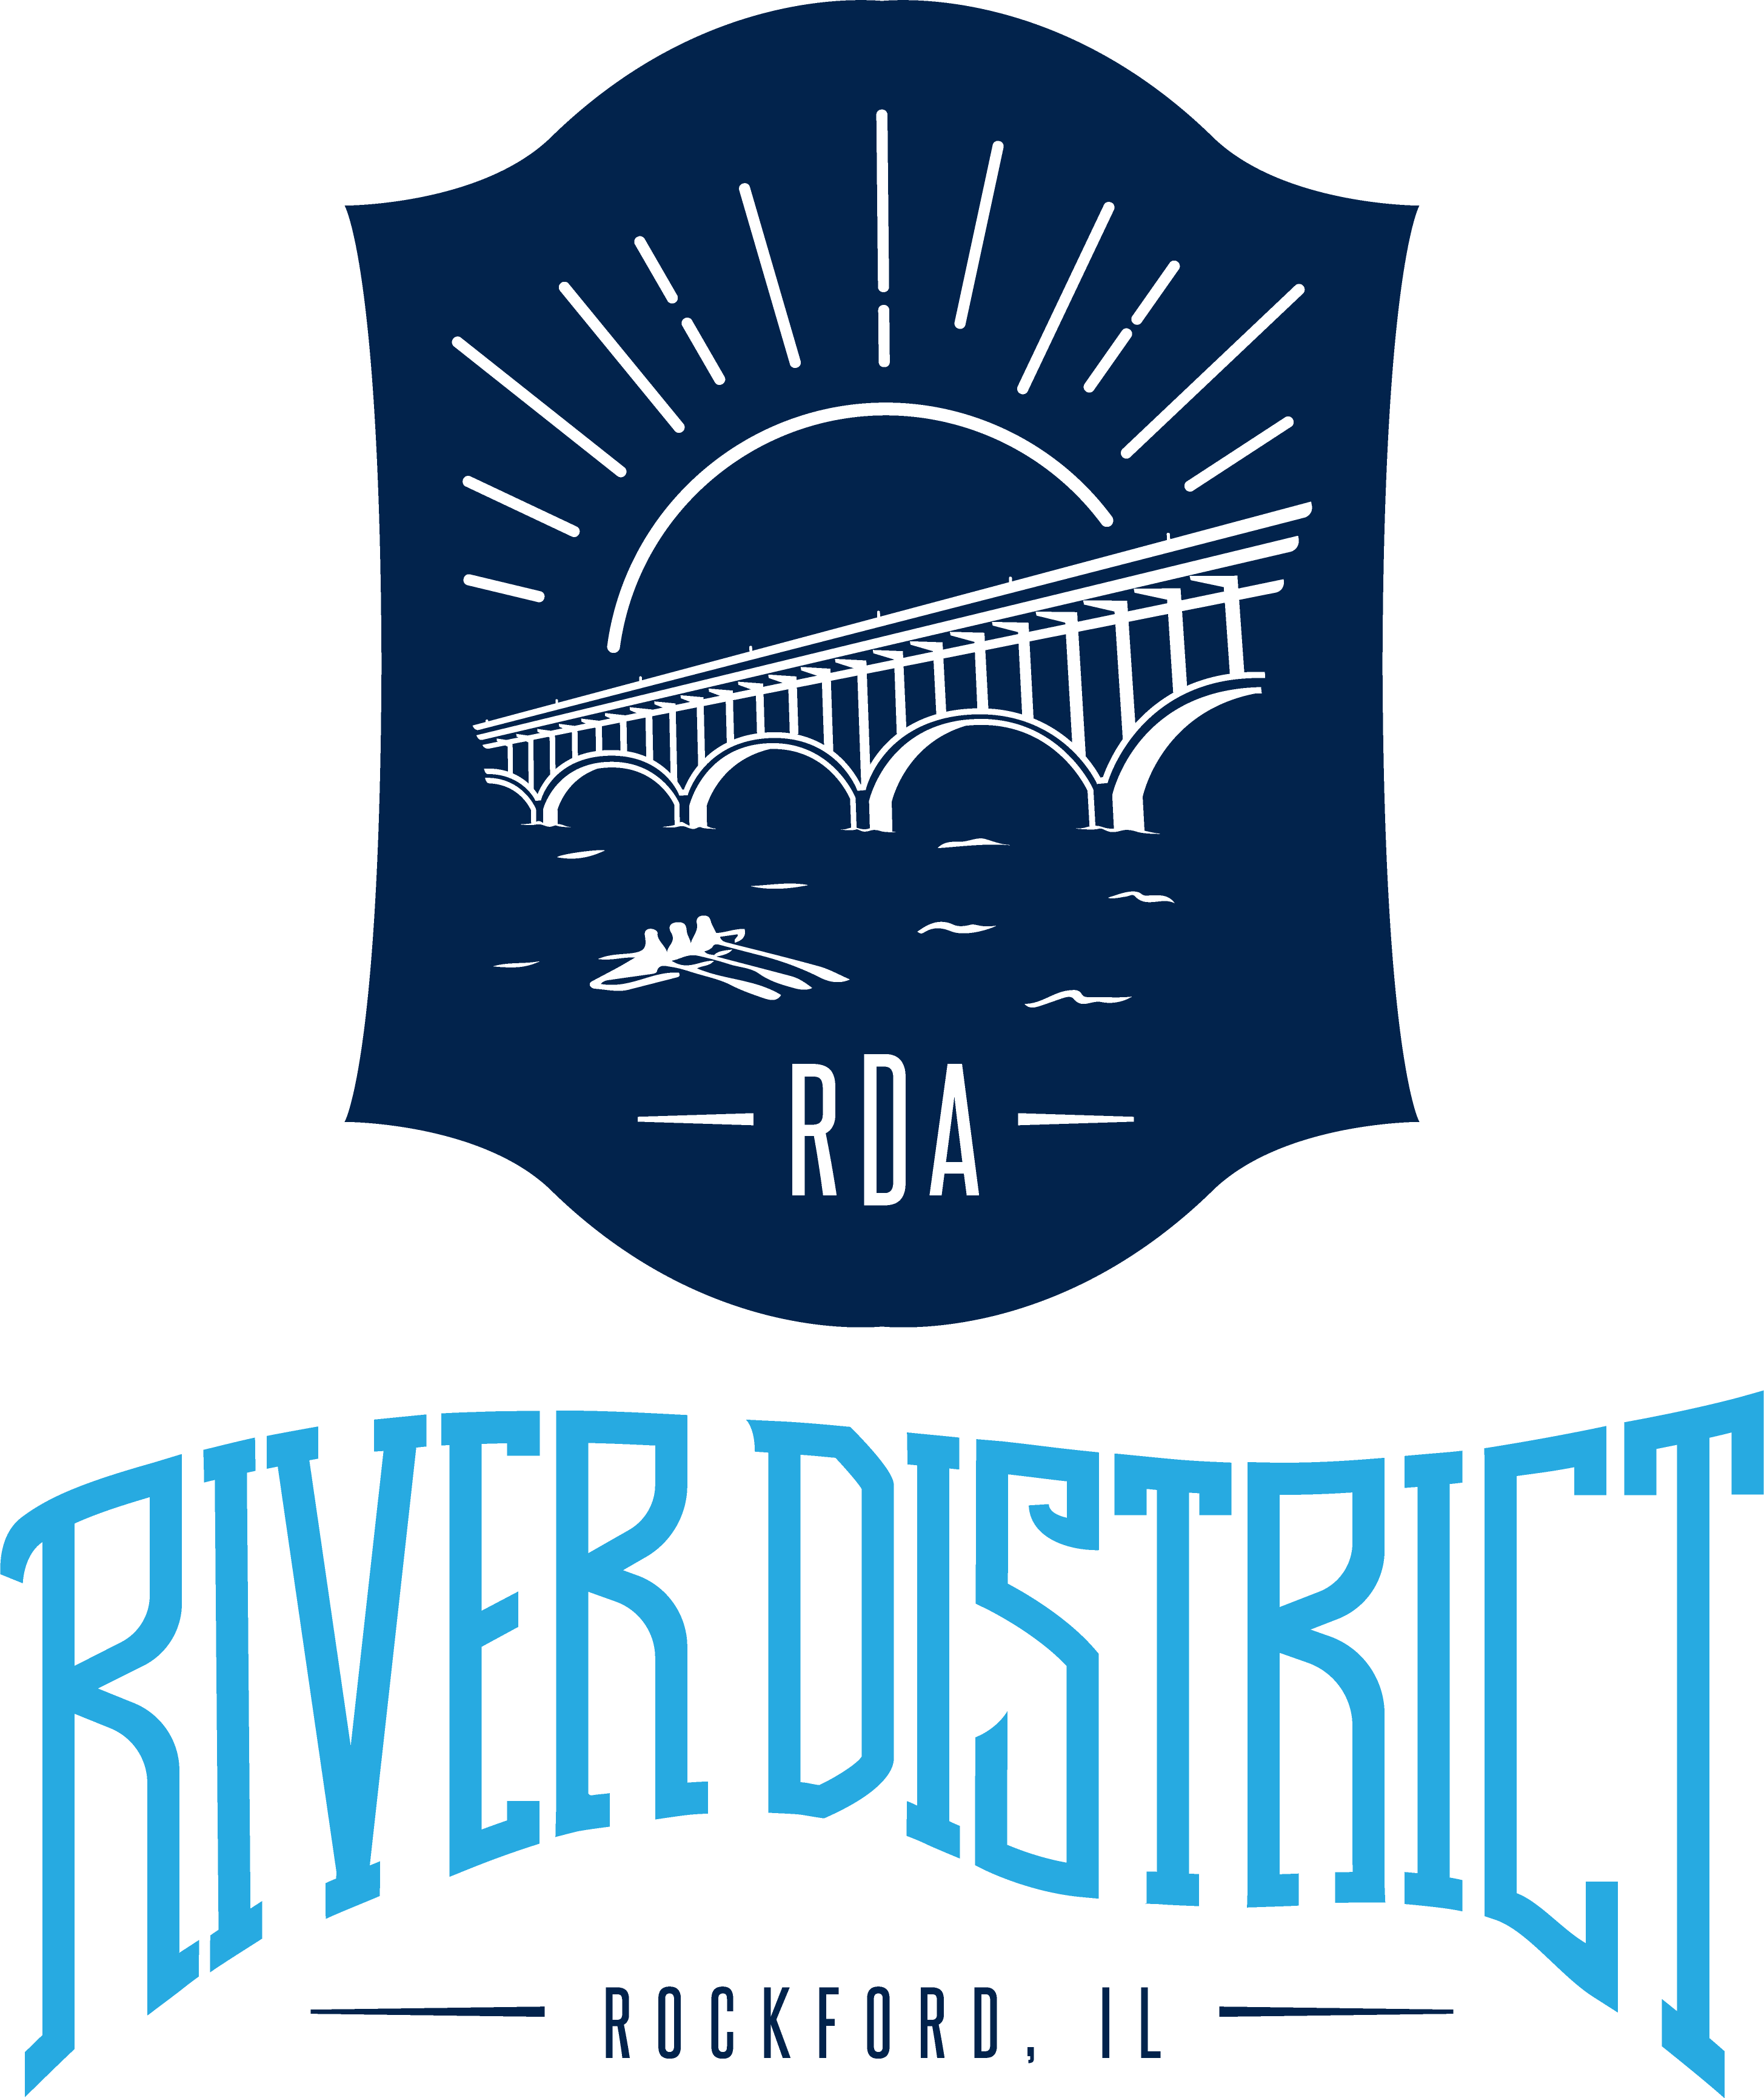 River District Association logo